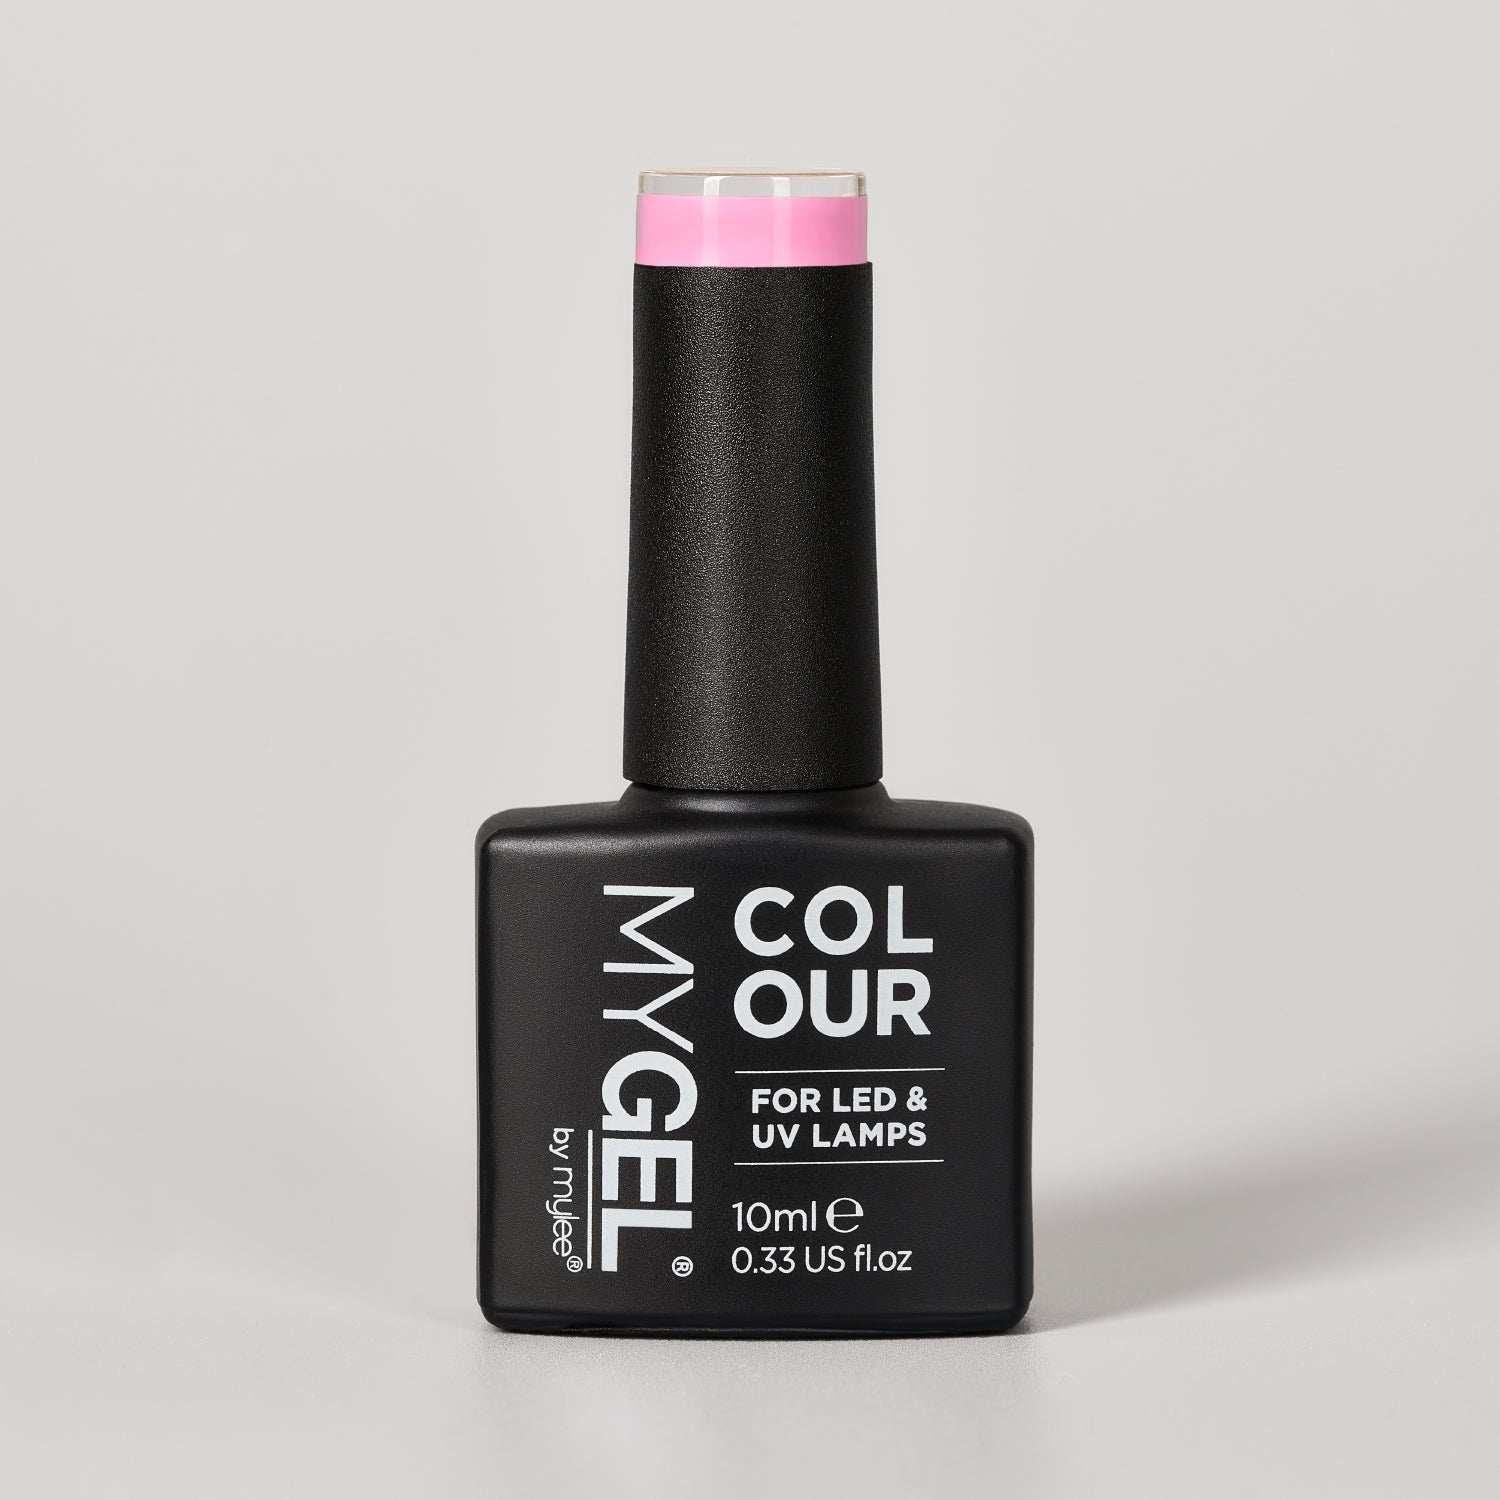 Mylee Candy Girl LED/UV Pink Gel Nail Polish 10ml – Long Lasting At Home Manicure/Pedicure, High Gloss And Chip Free Wear Nail Varnish